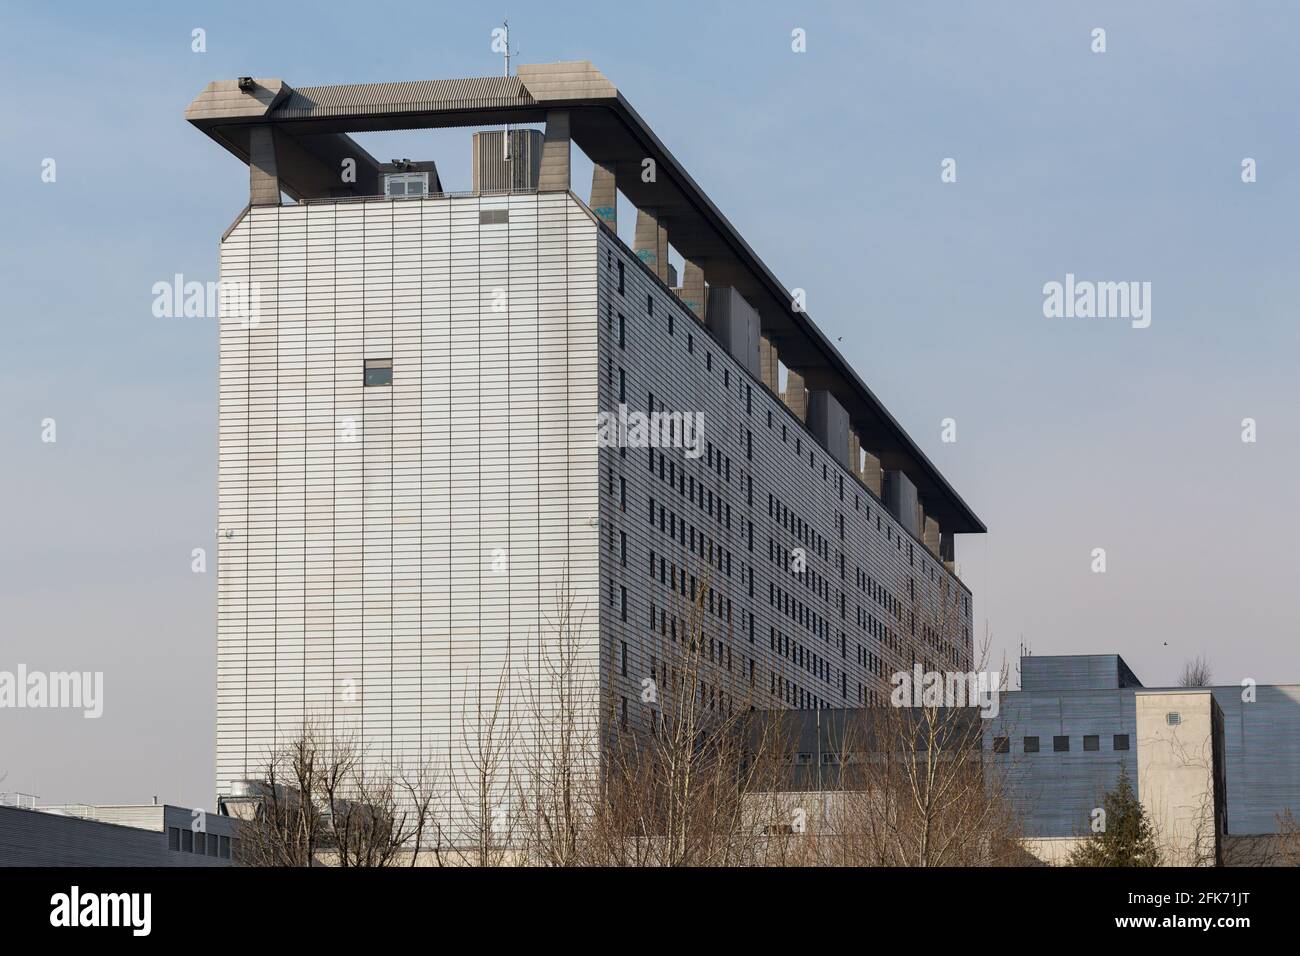 Munich, Großhadern, Germany - Mar 9, 2021: Side view of Klinikum Großhadern hospital. Munich's largest hospital. Stock Photo